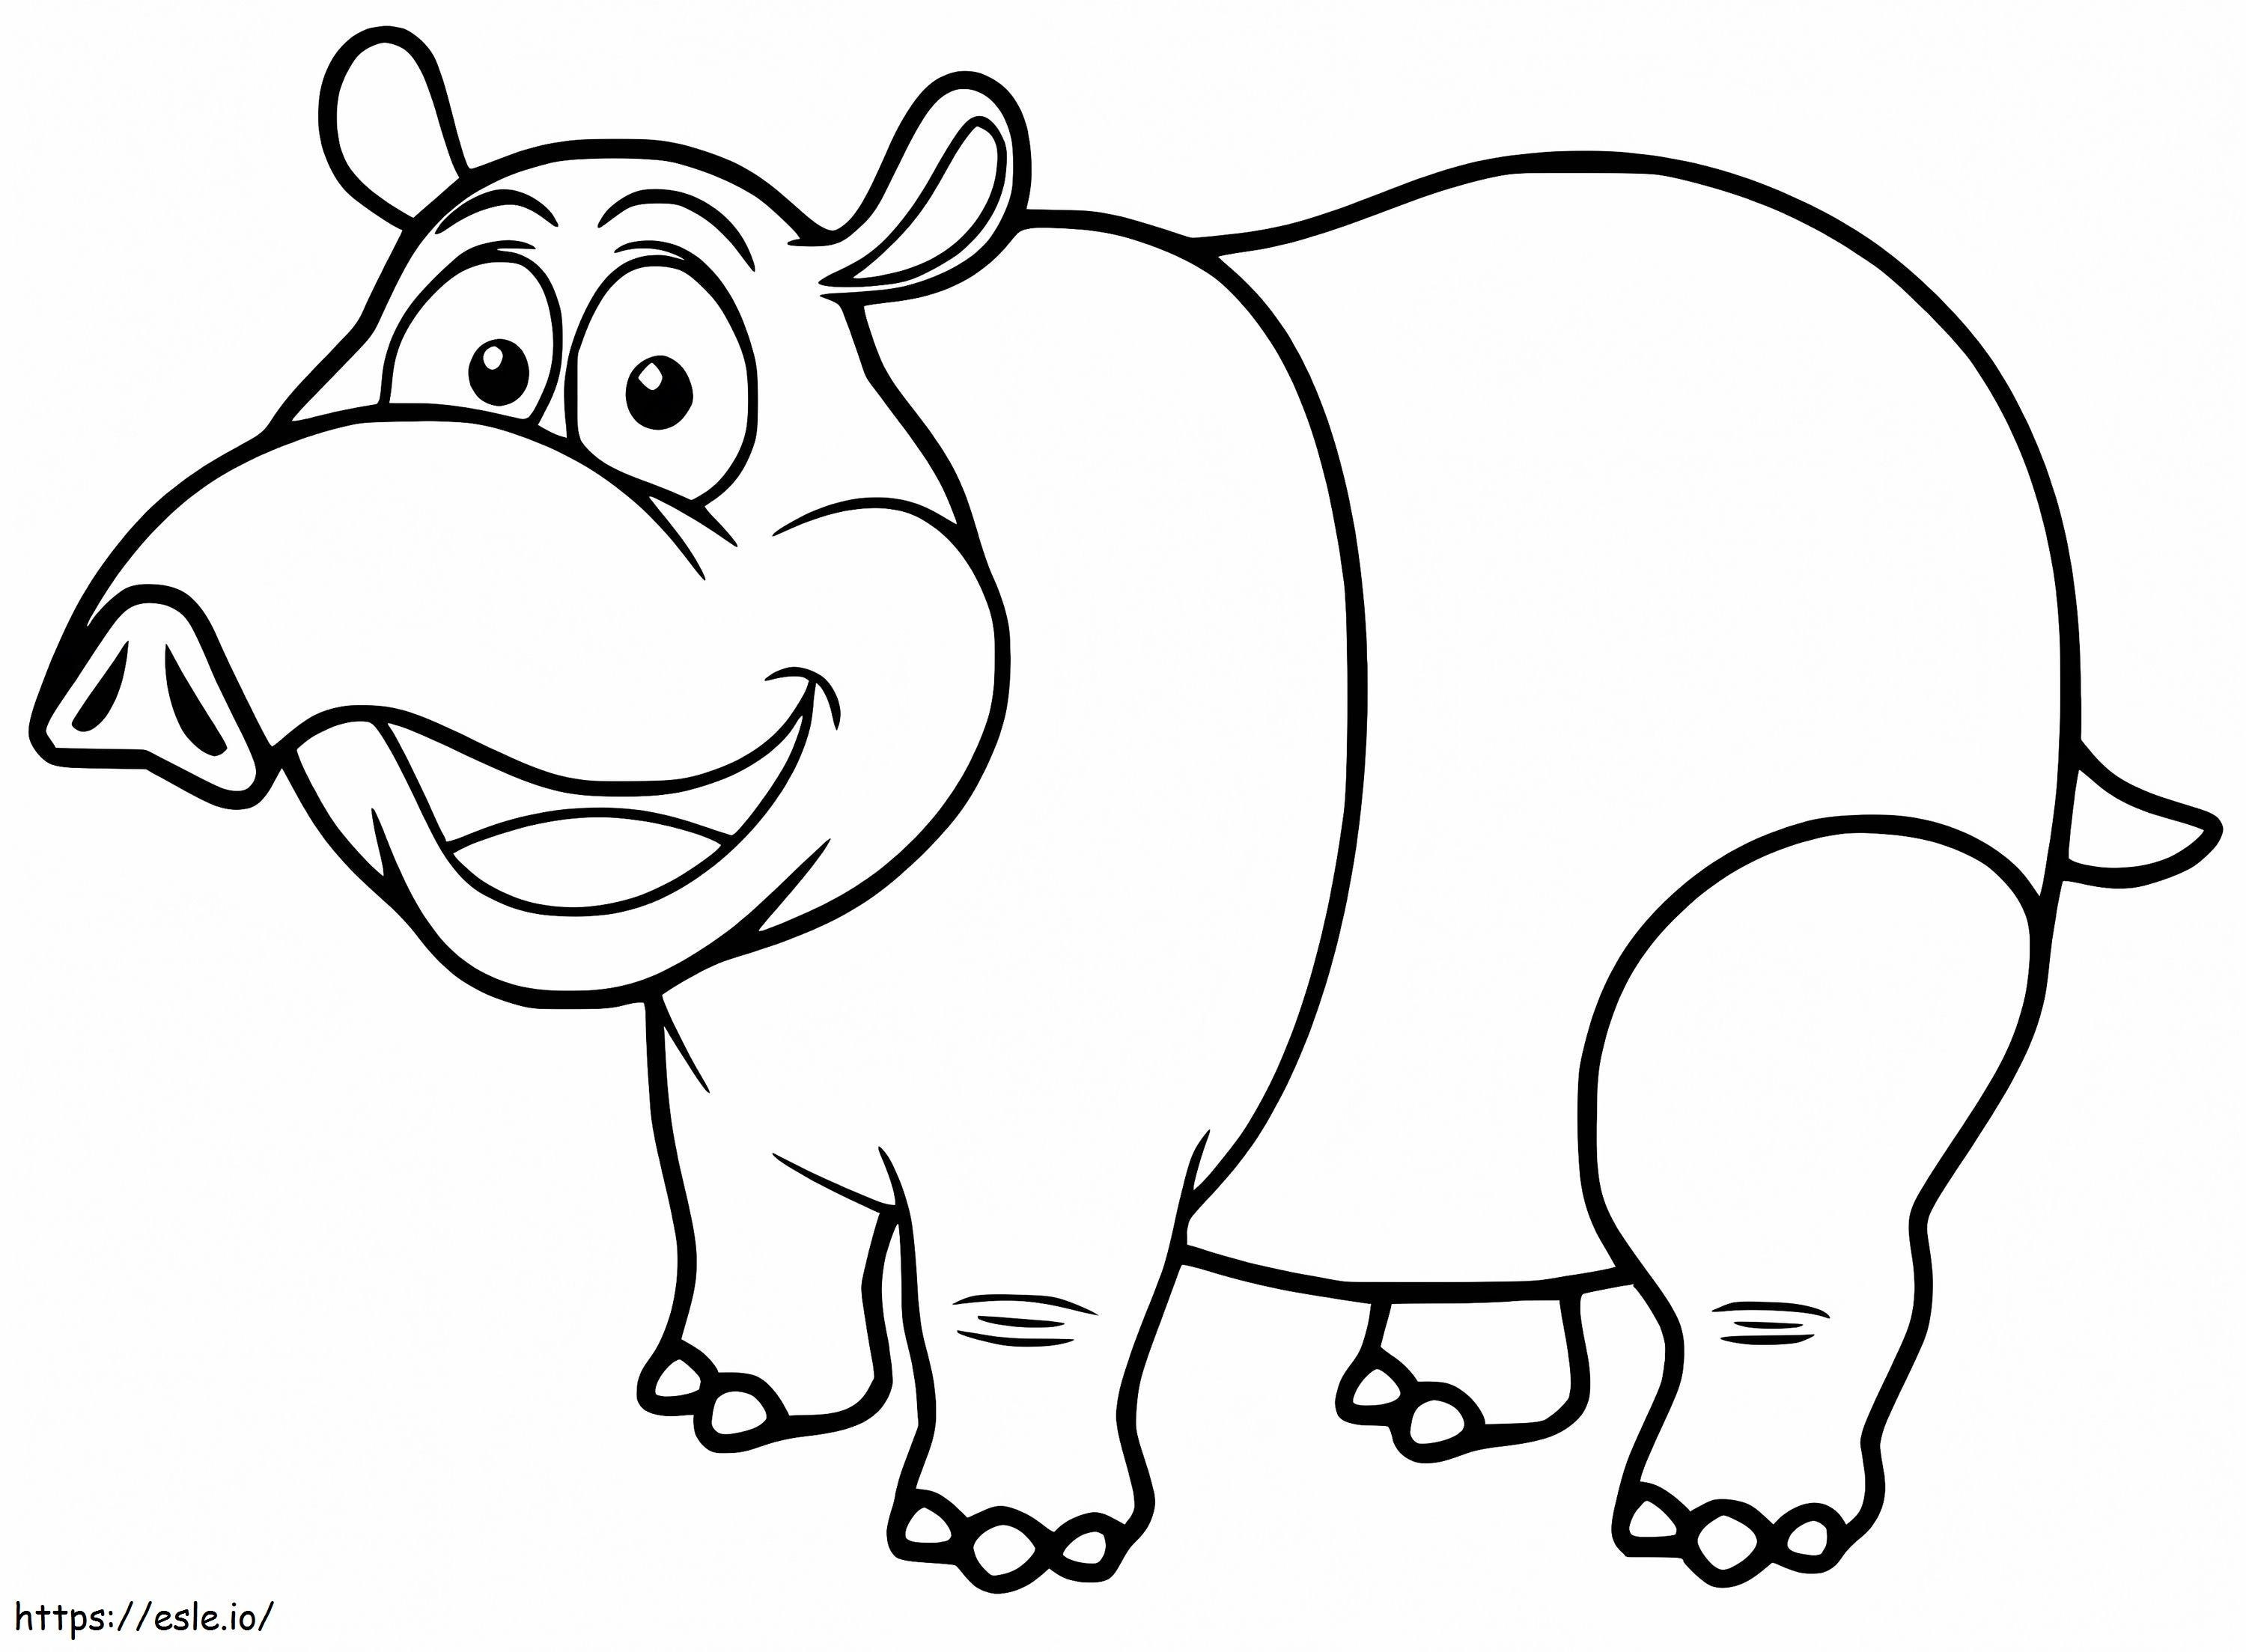 Happy Tapir coloring page